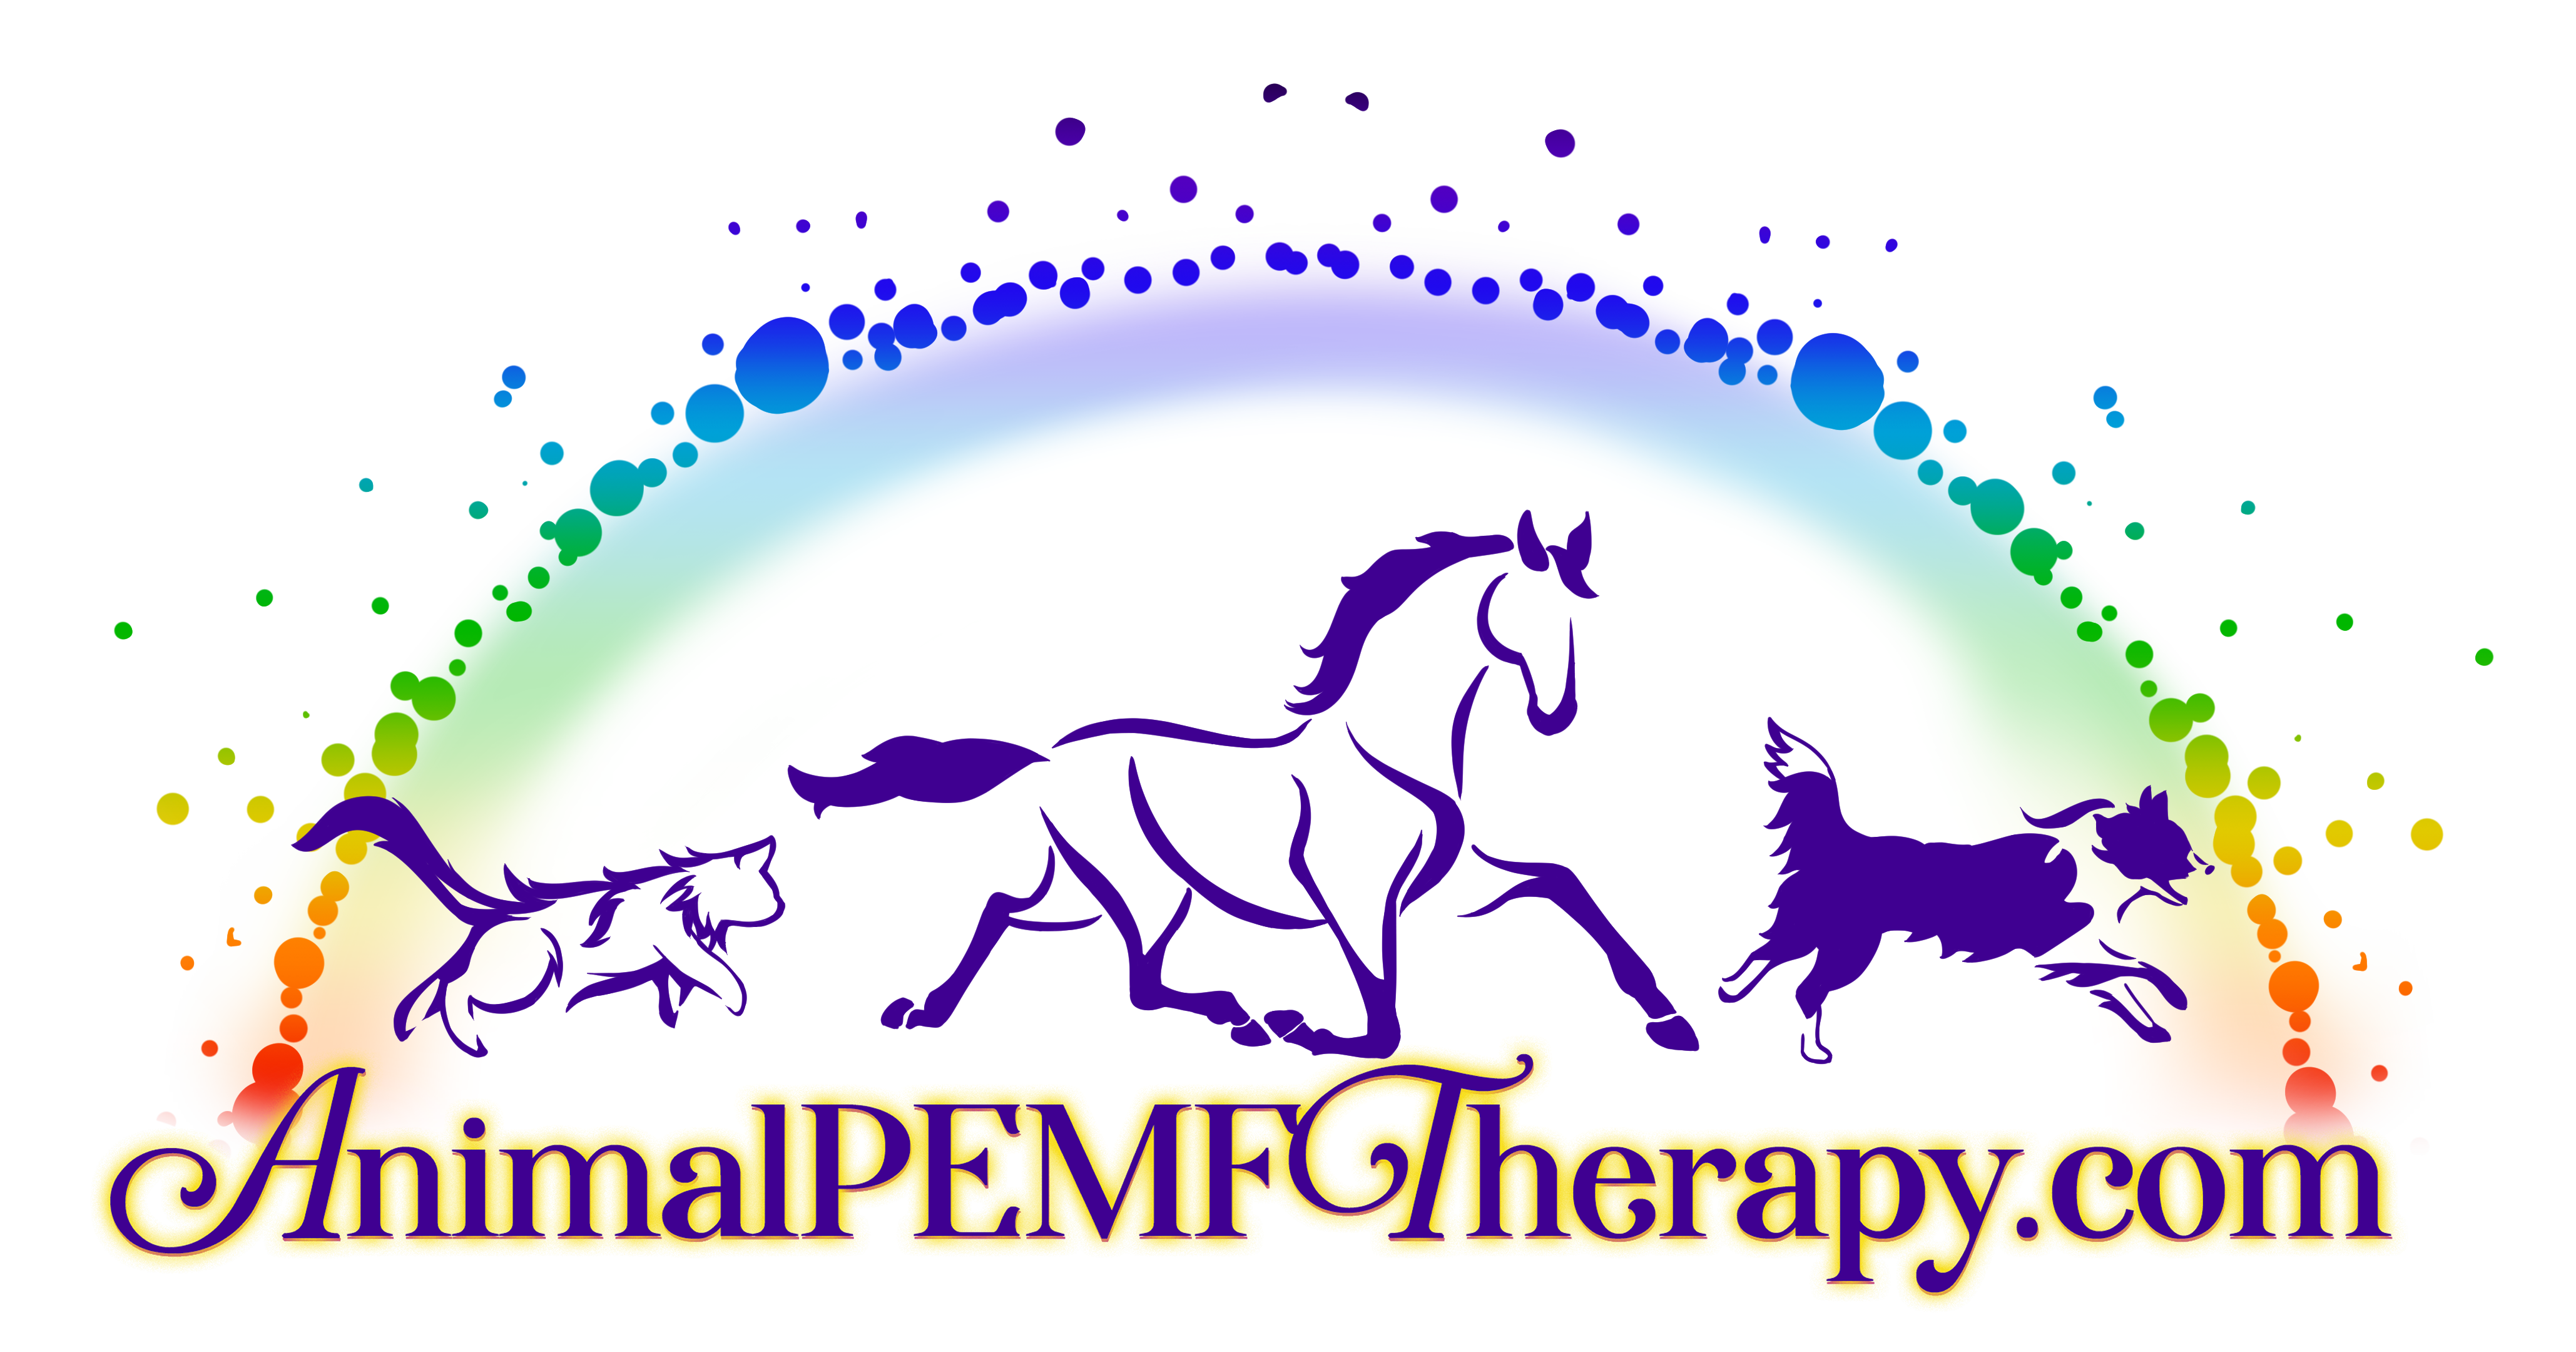 Animal PEMF Therapy